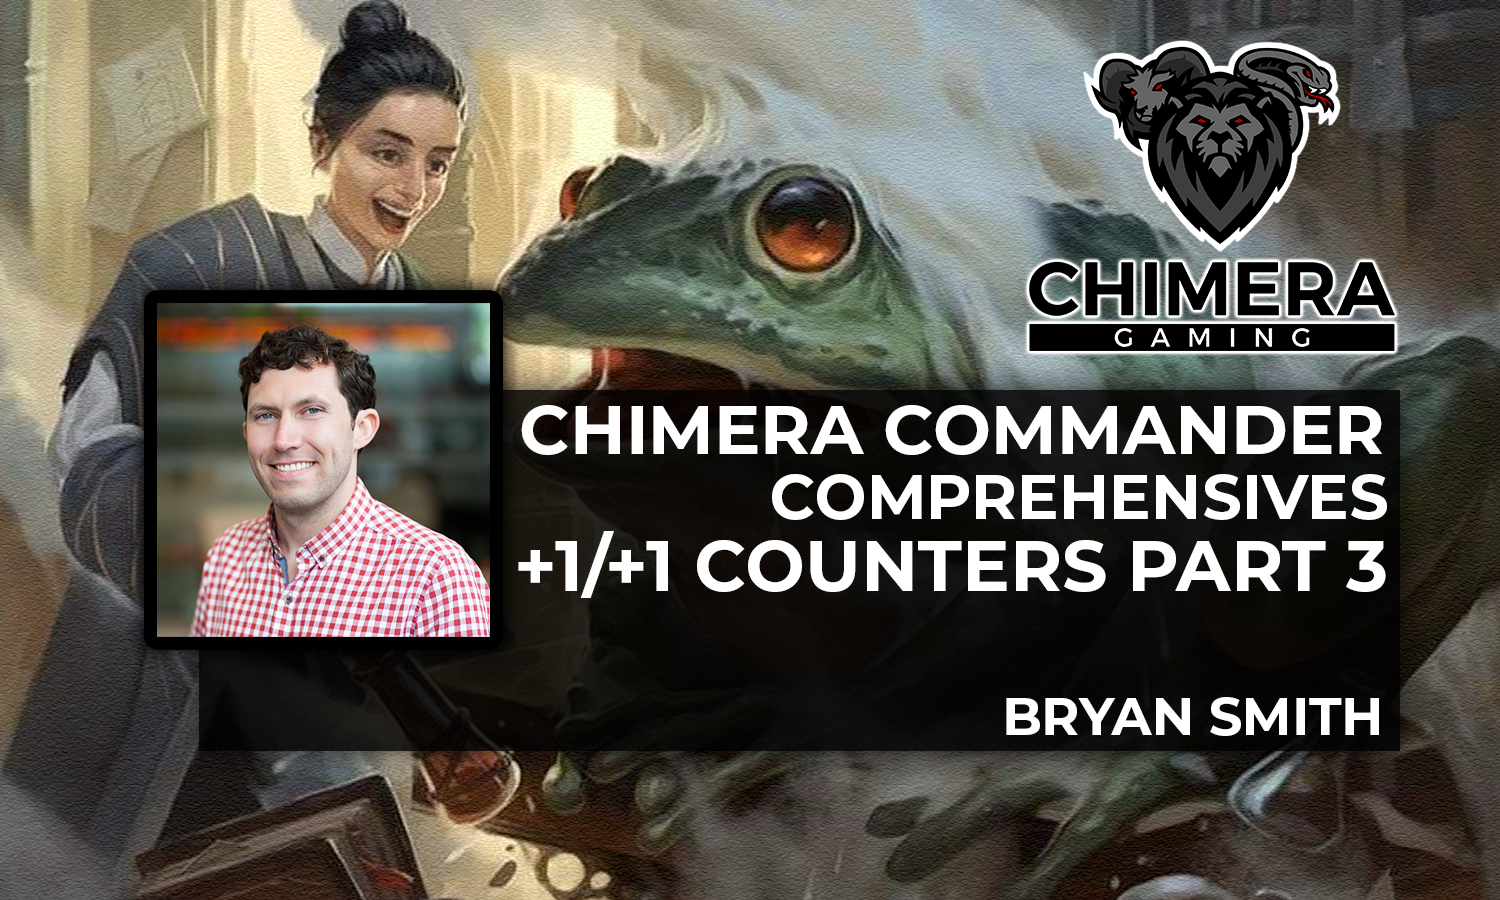 Chimera Commander Comprehensives: +1/+1 Counters Part 3